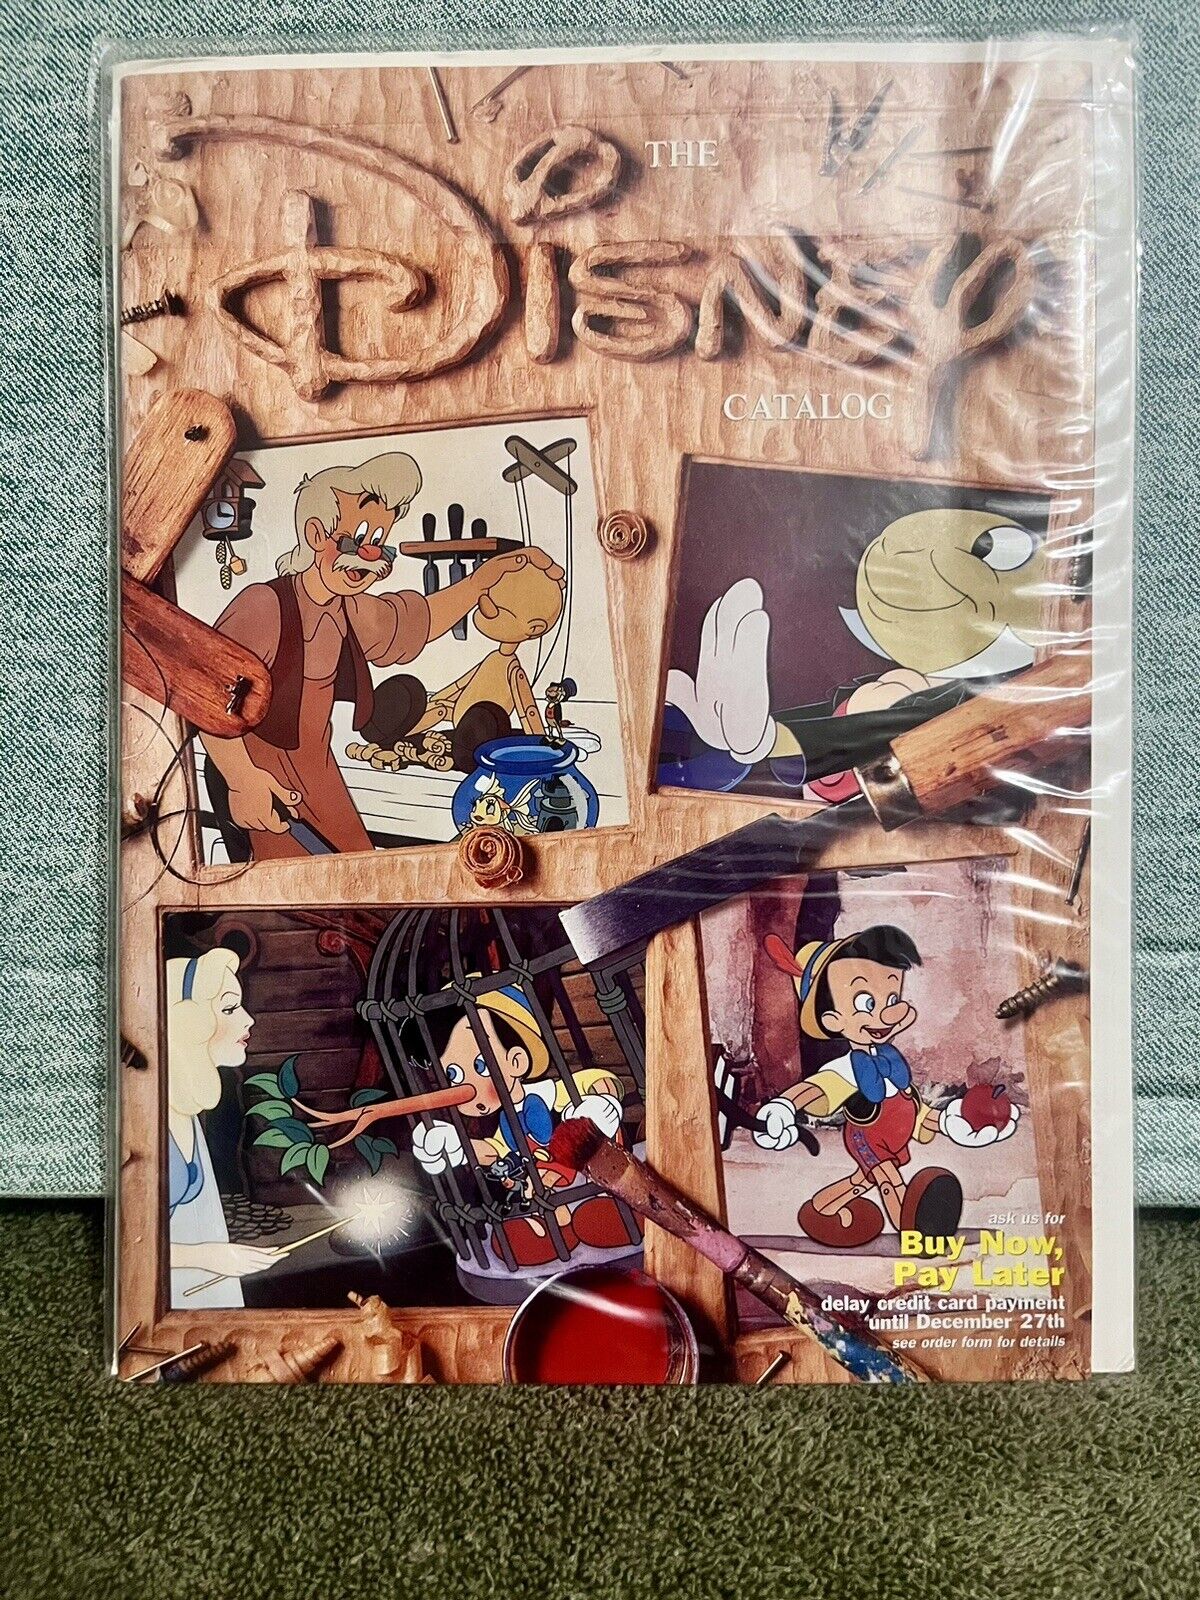 The Disney Catalog Vintage 90’s Villain Cover